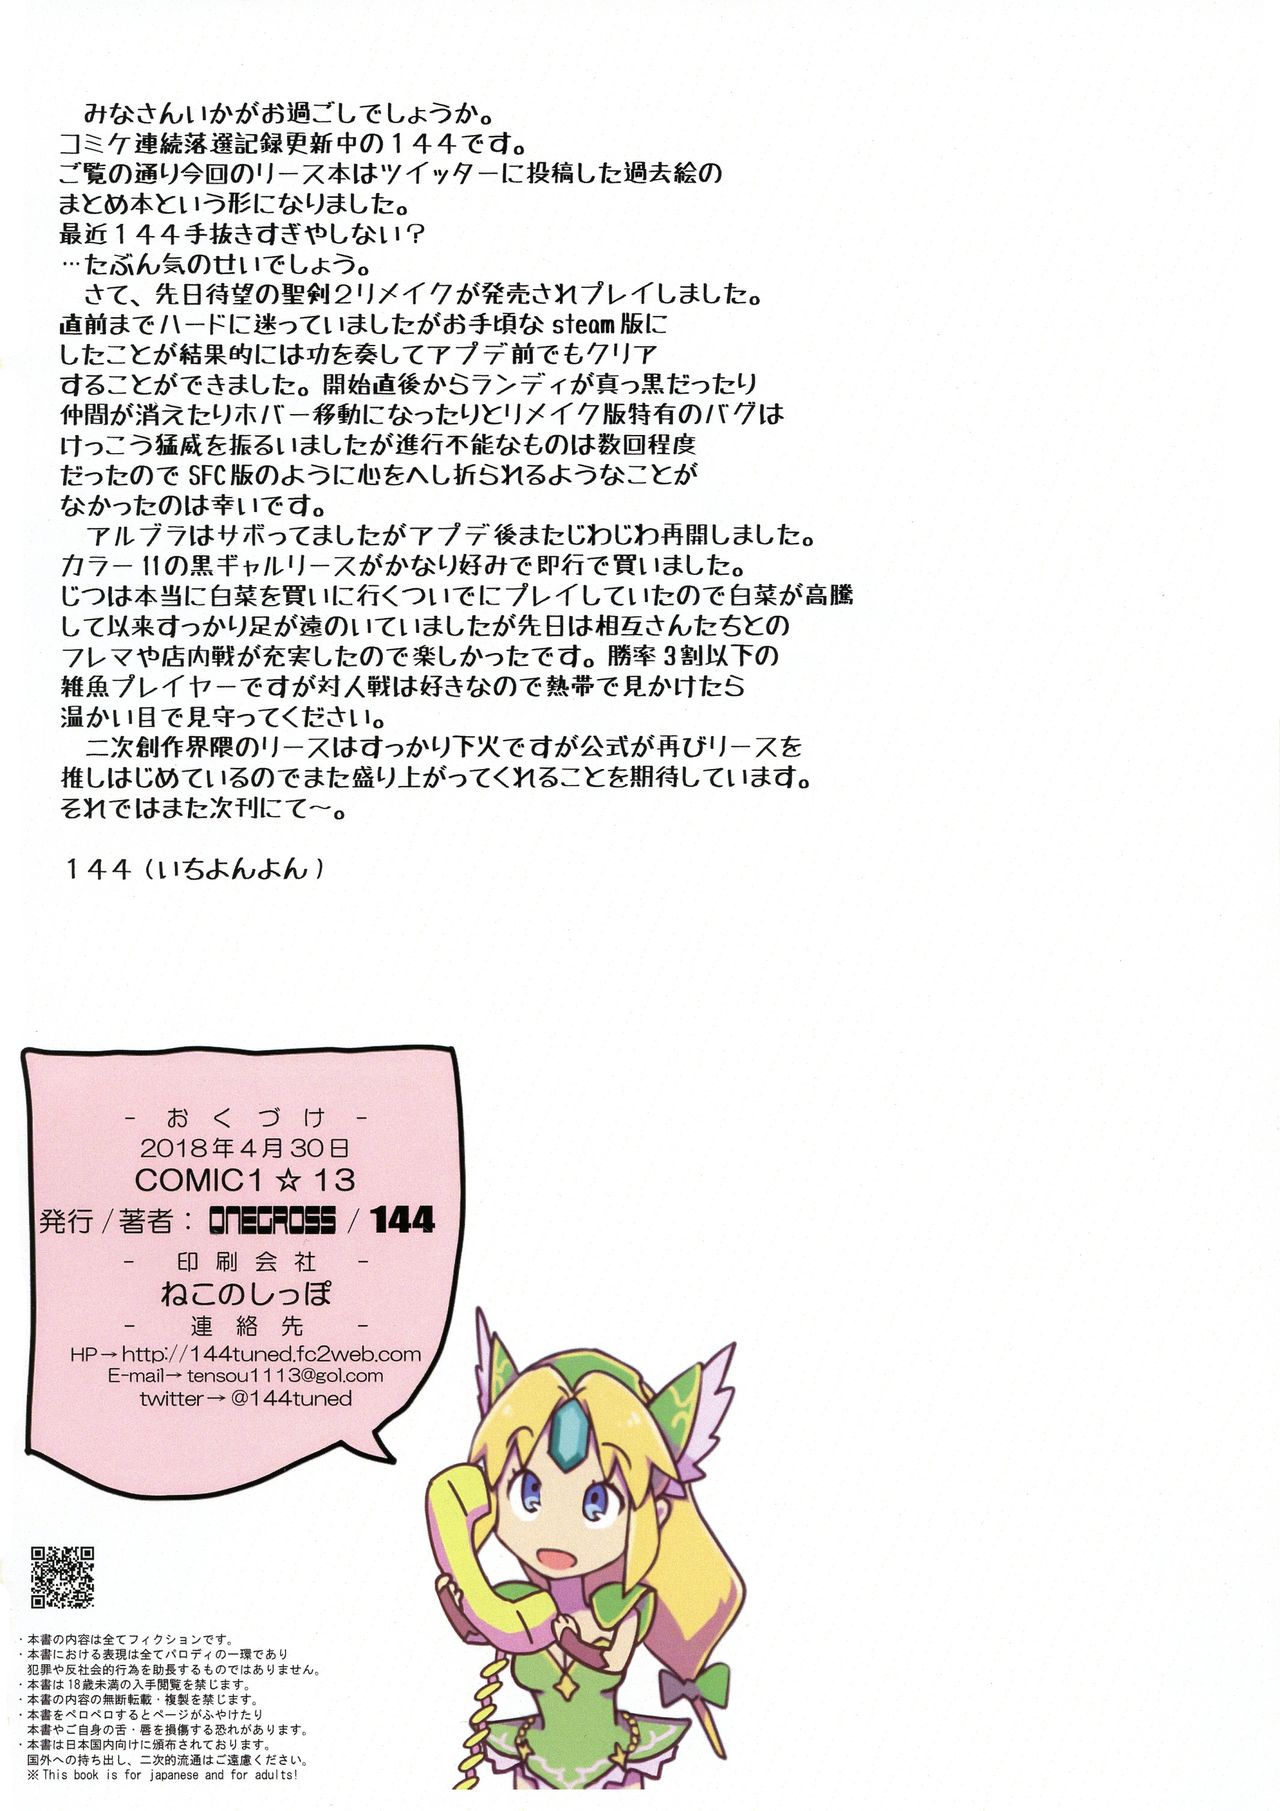 (COMIC1☆13) [ONEGROSS (144)] Netu-Zou-Sei Million RIESZur (聖剣伝説3)